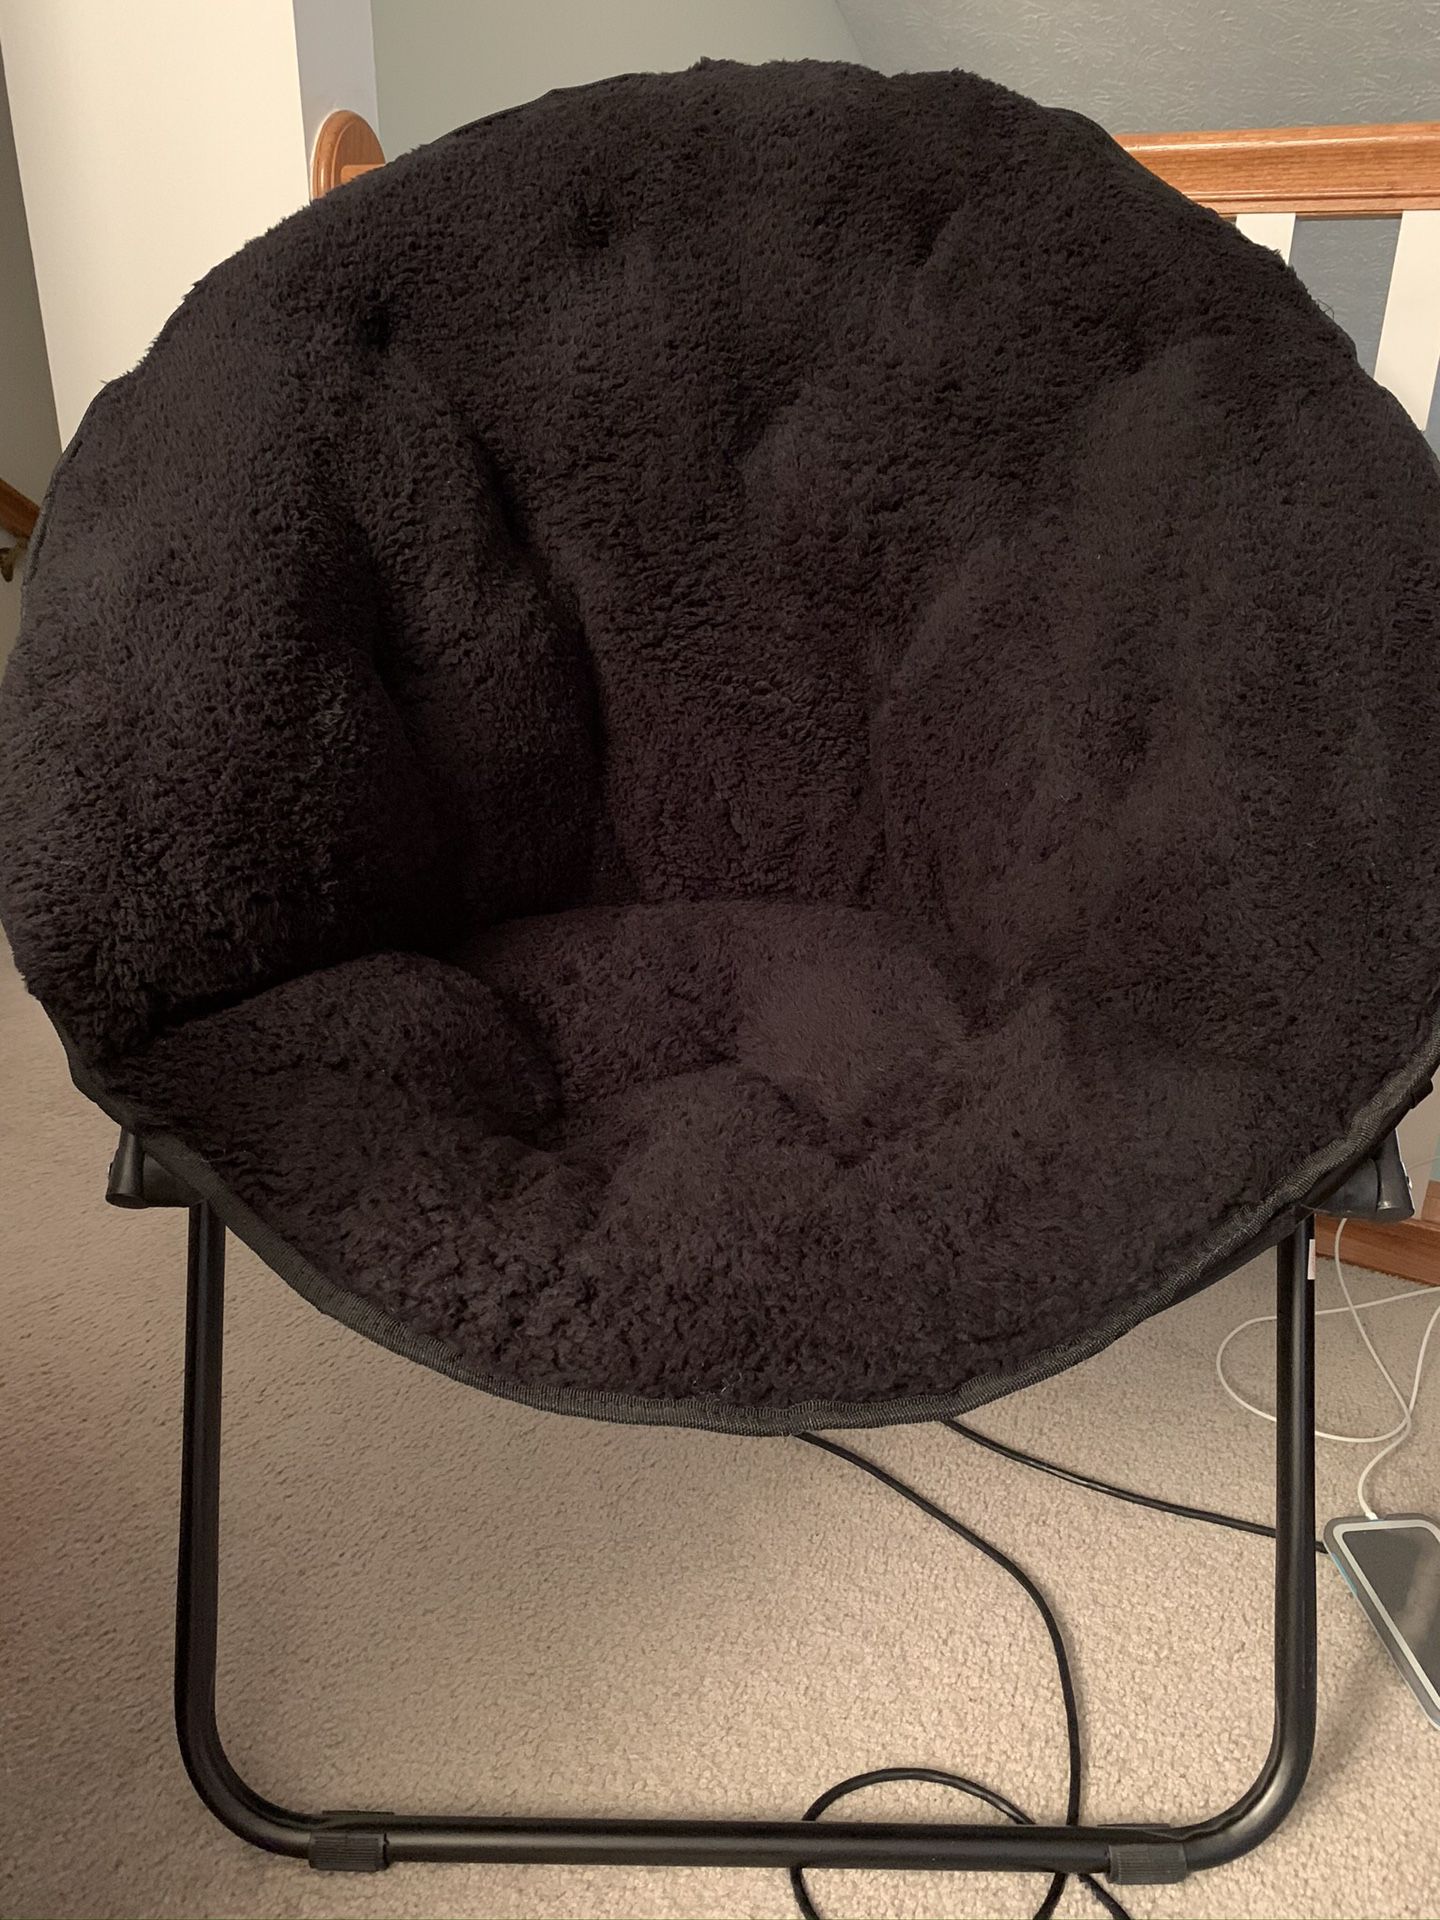 black fuzzy chair